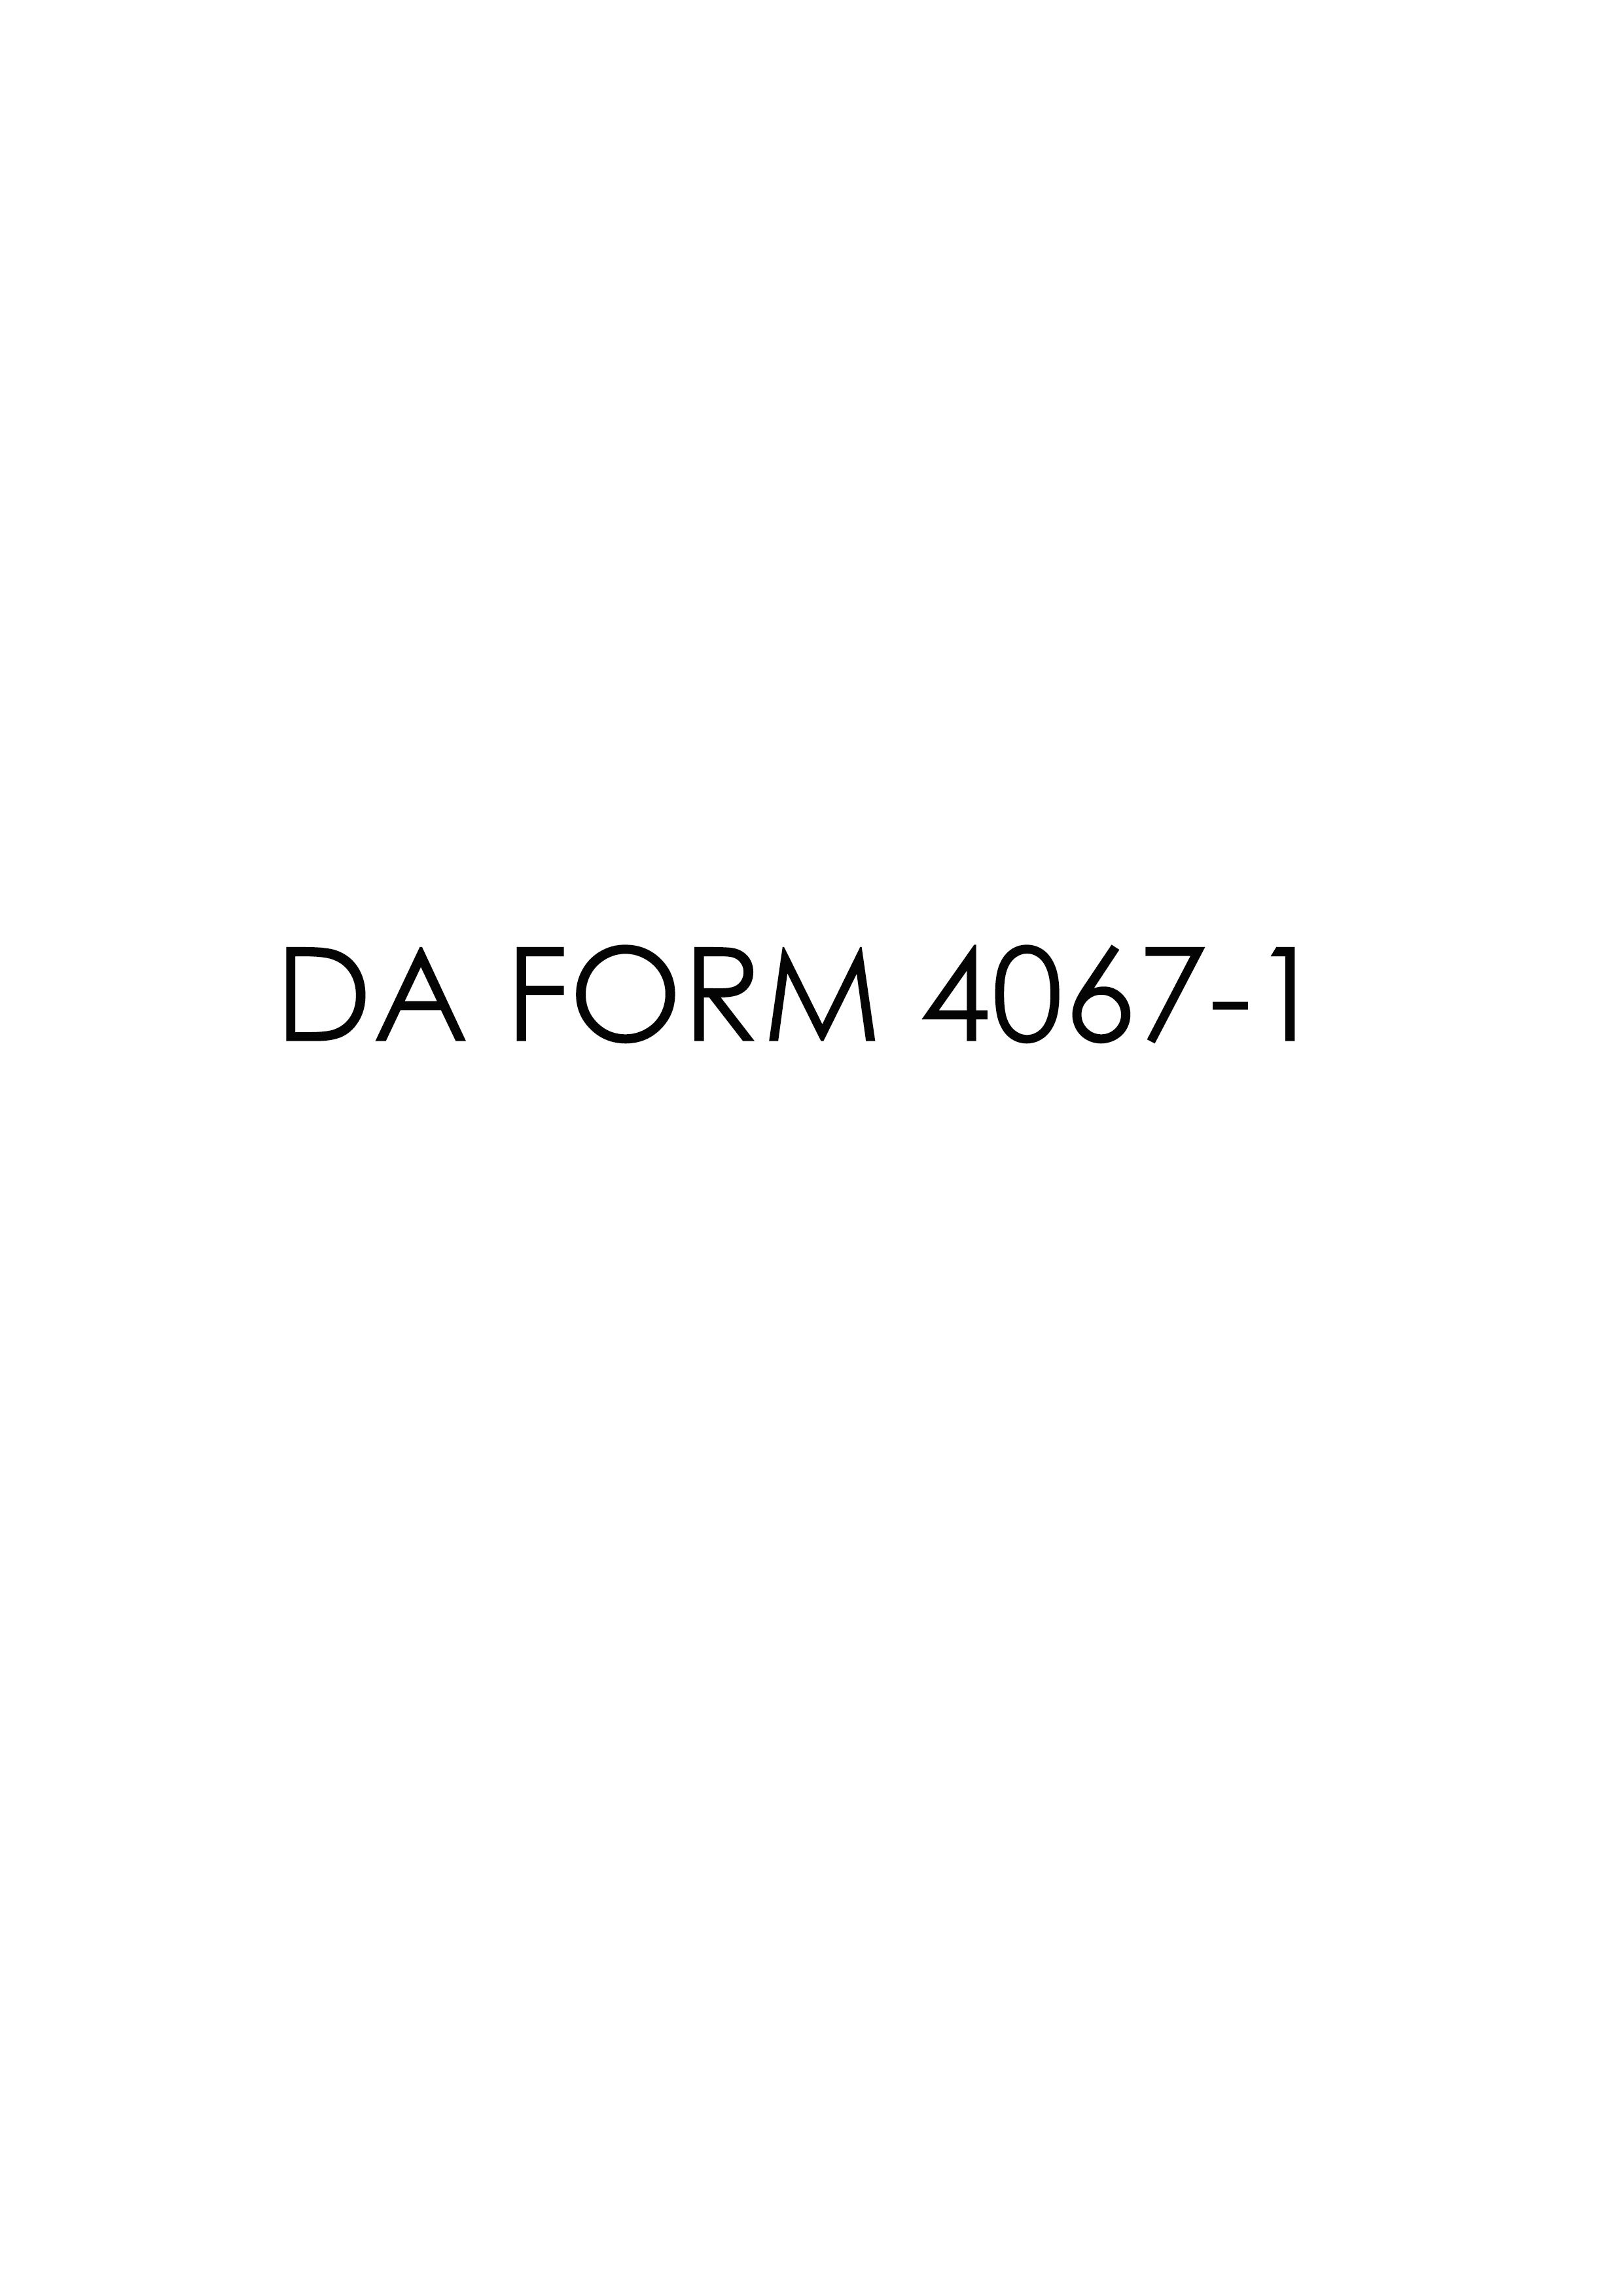 da Form 4067-1 fillable